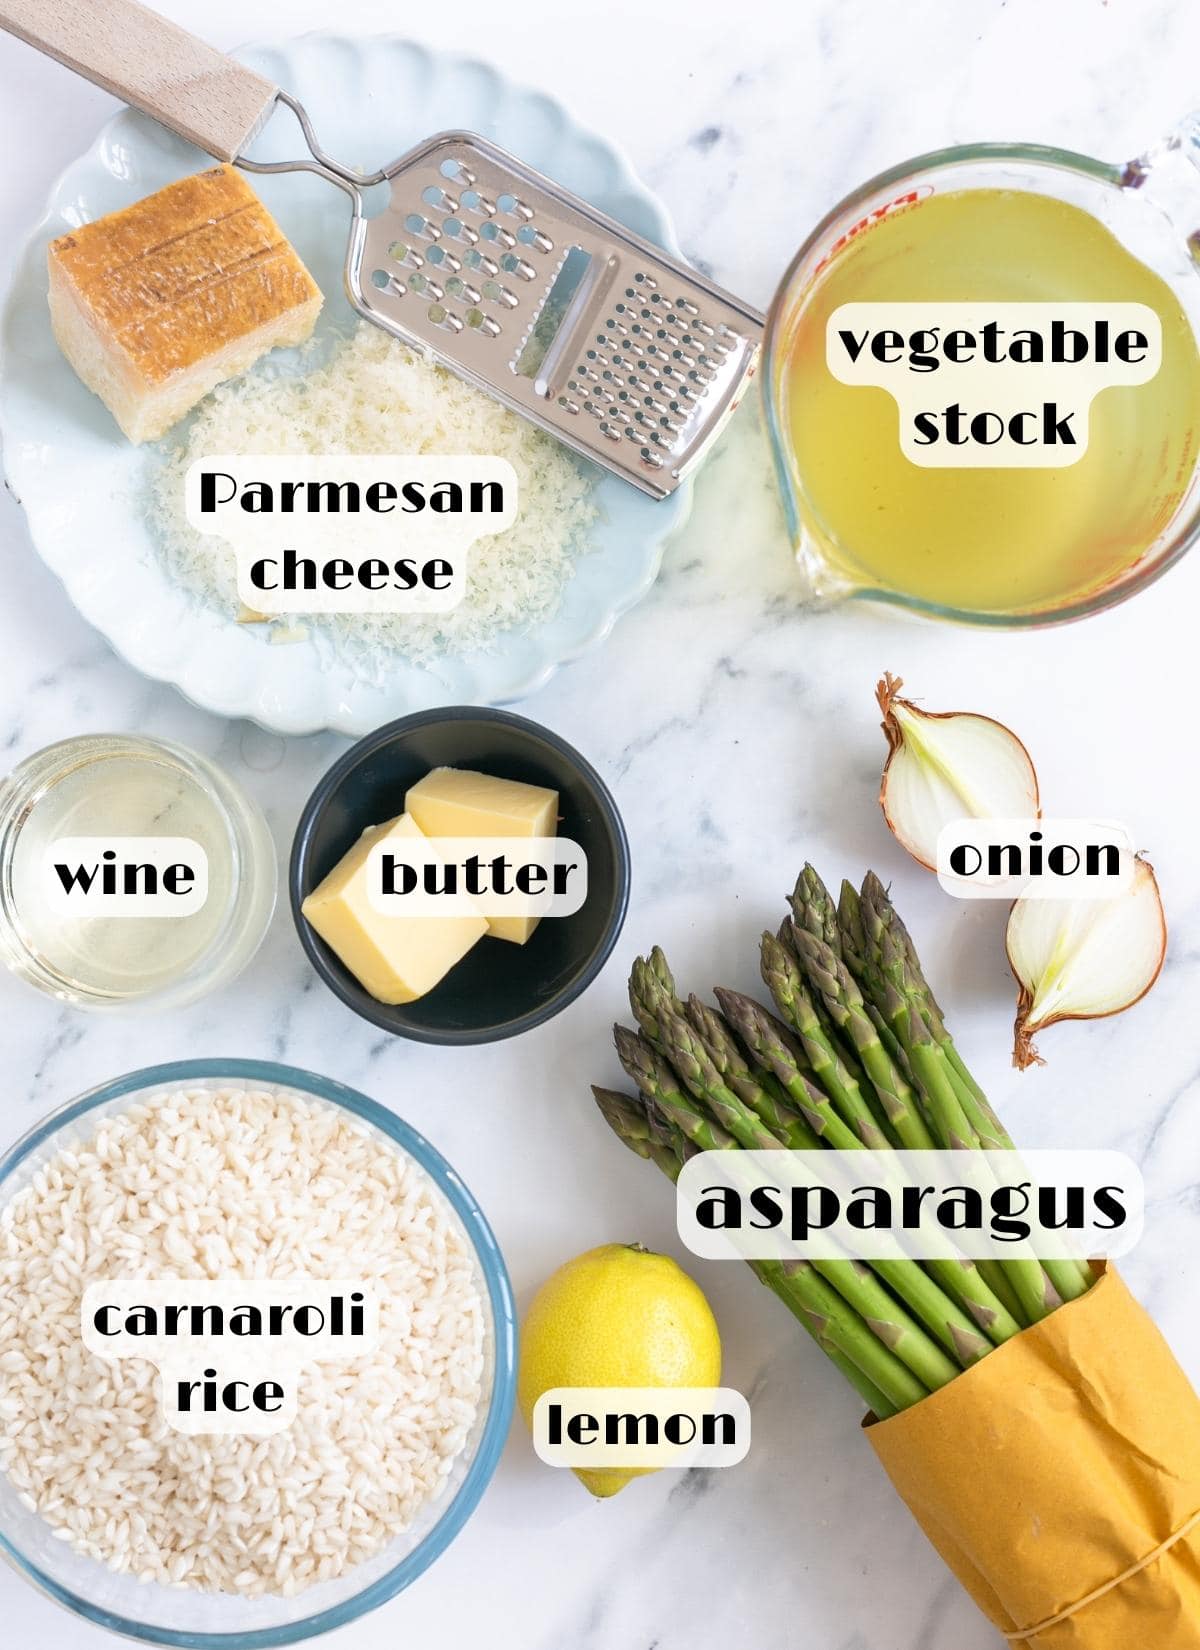 asparagus risotto ingredients: stock, parmesan, onion, butter, rice, asparagus, lemon, wine, butter.